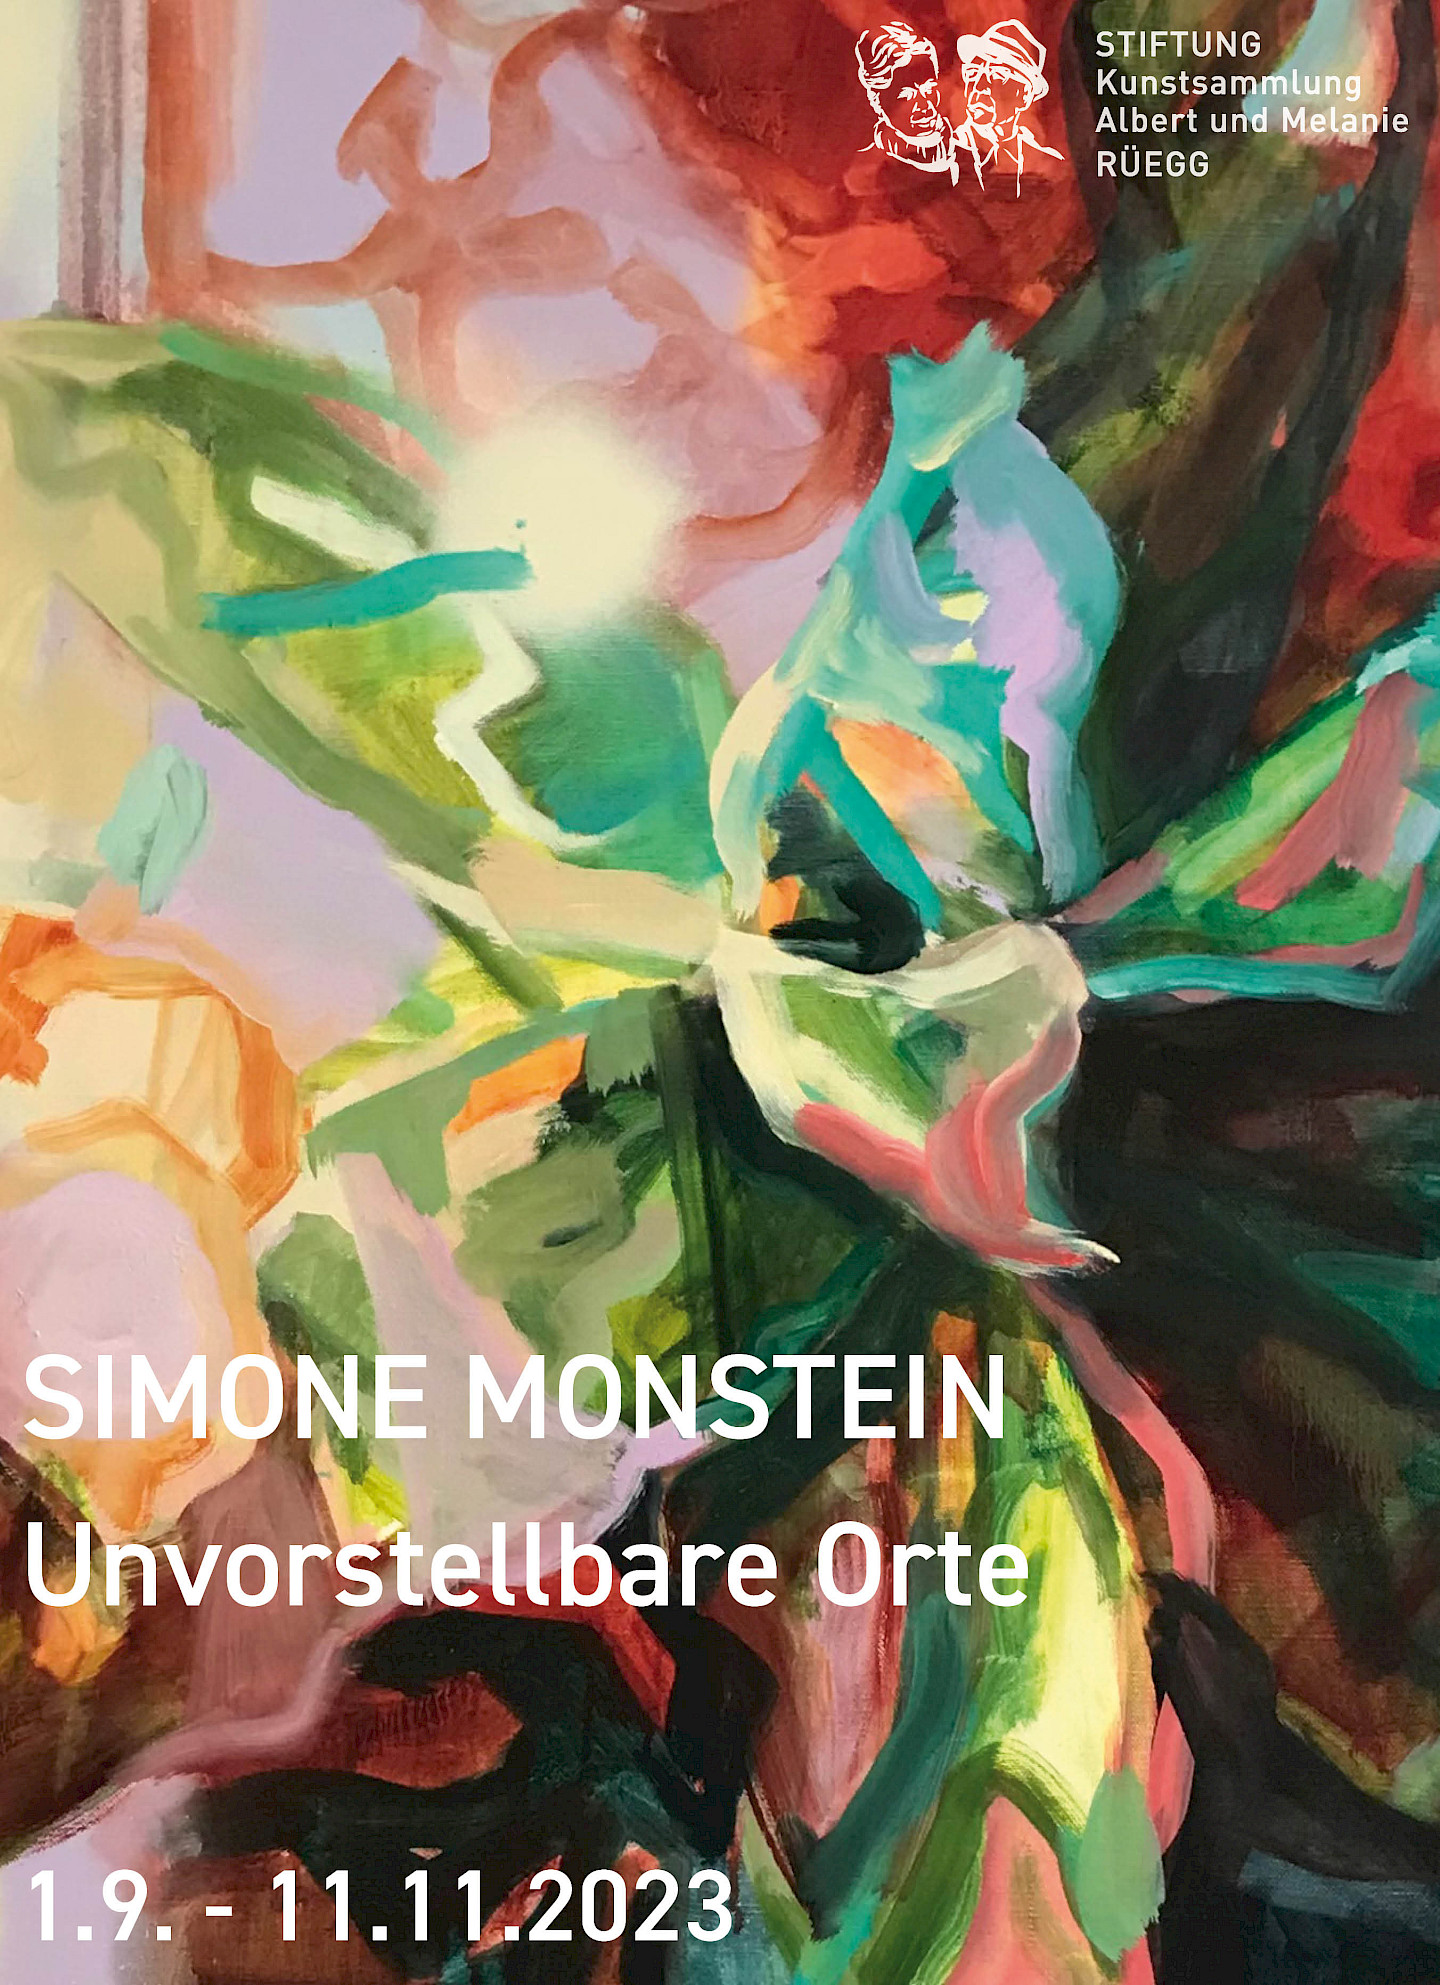 Simone Monstein